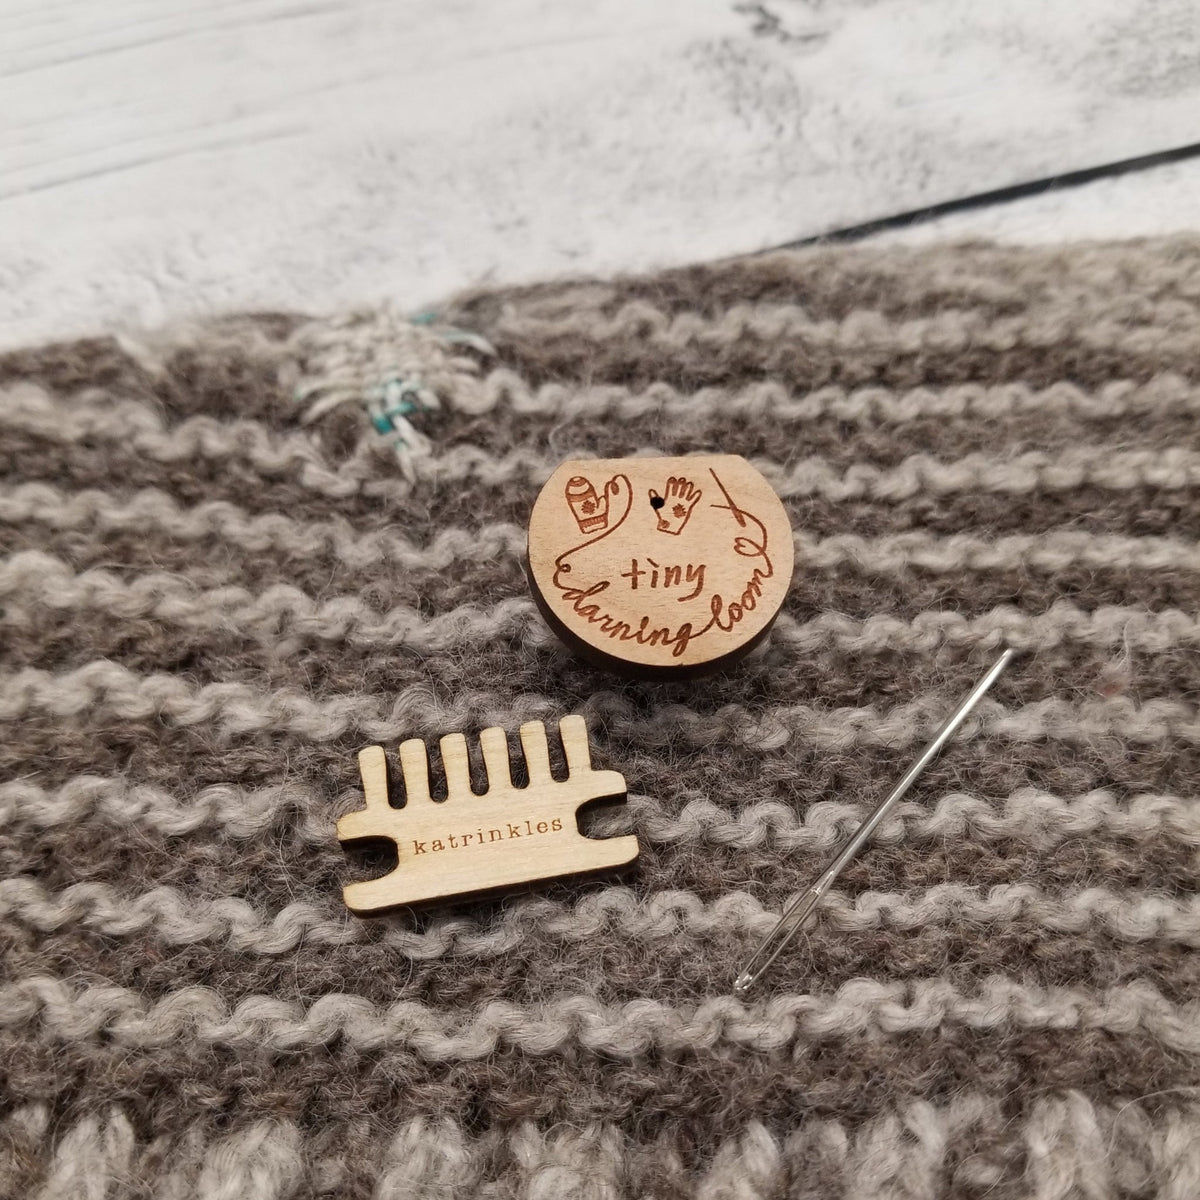 Darning and mending Loom kit – The Yarn Club, Inc